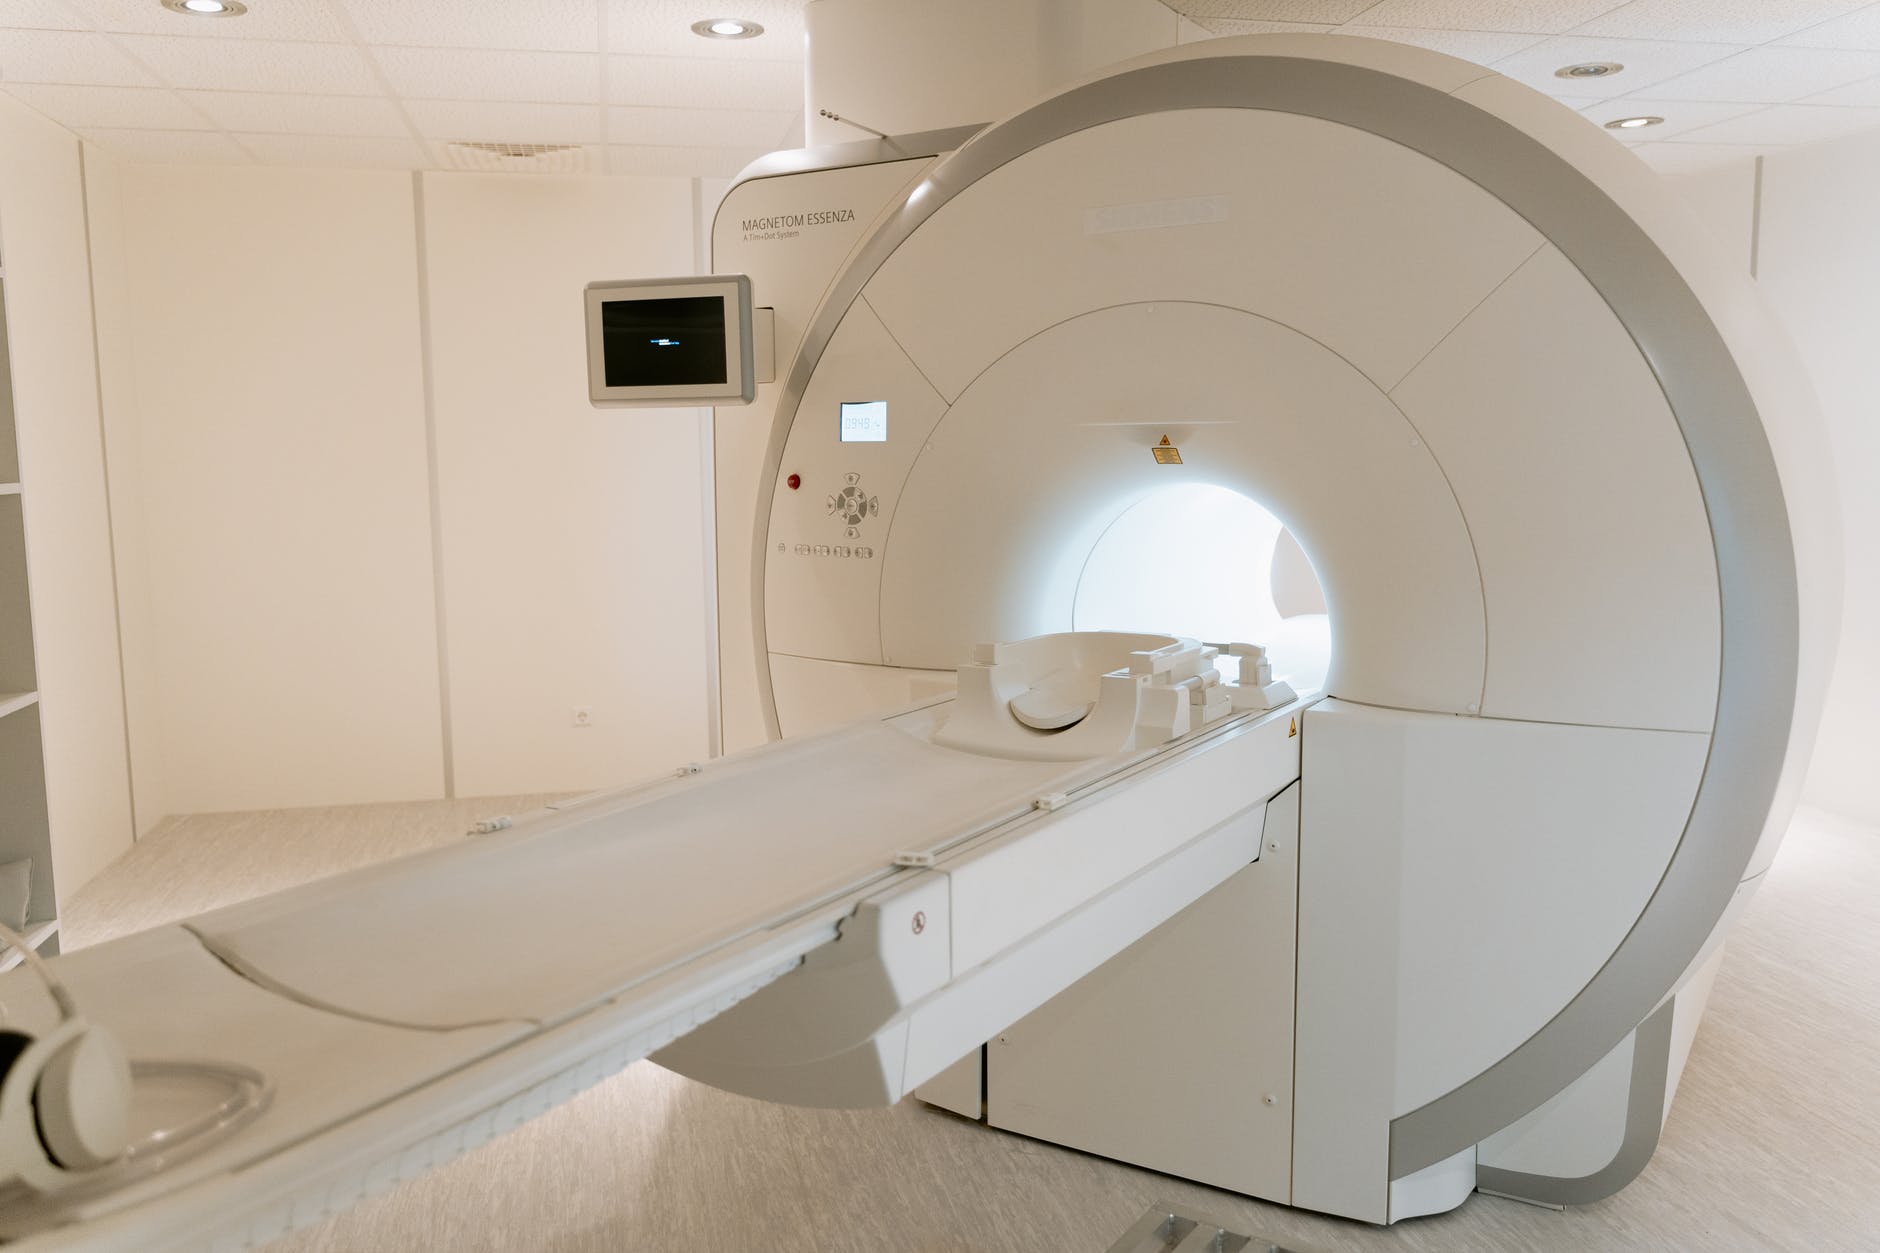 Cervical MRI and hernia: Diagnostic tool